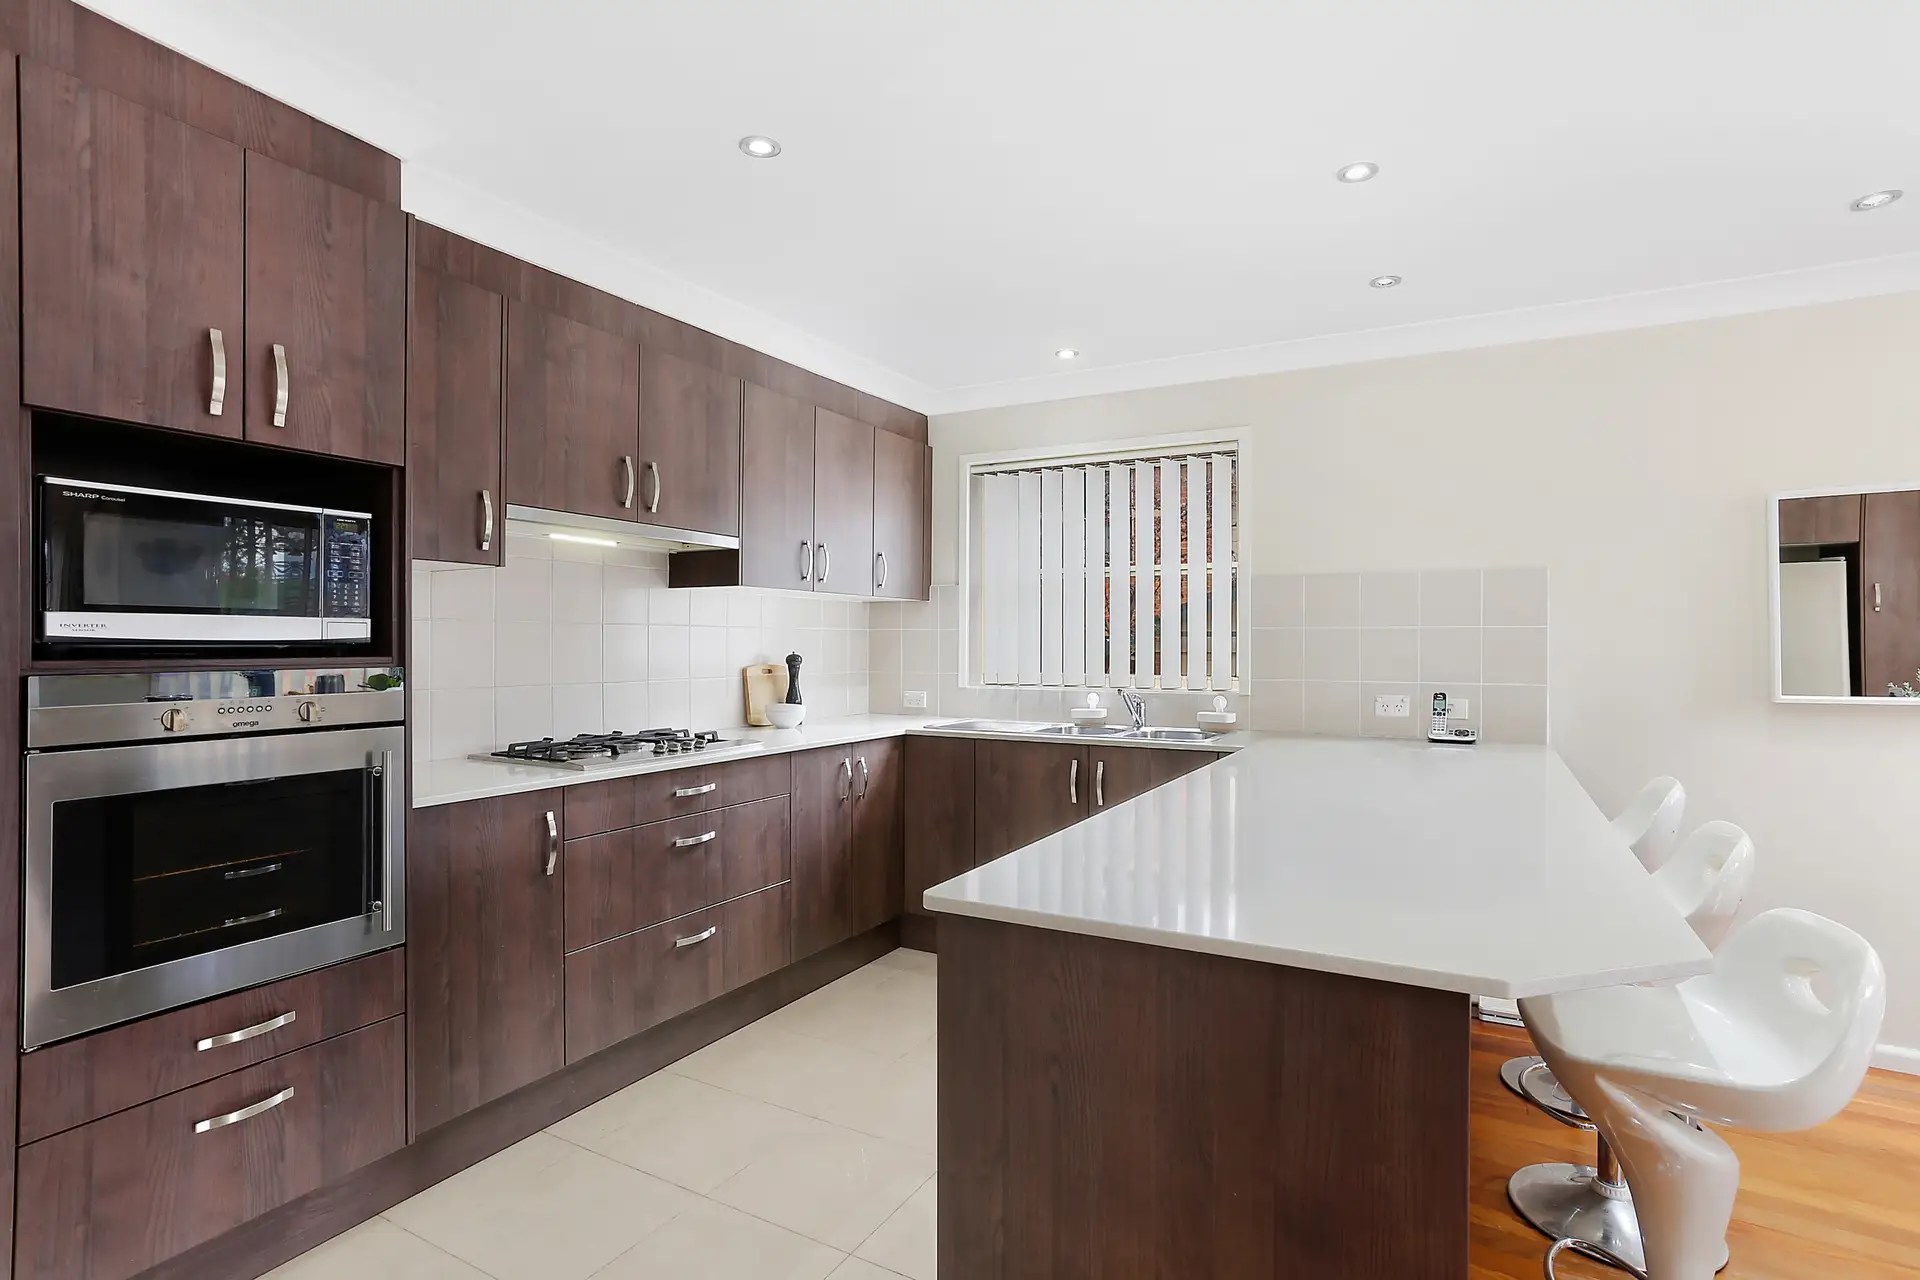 14/1 Bennett Avenue, Strathfield South Sold by Richard Matthews Real Estate - image 3